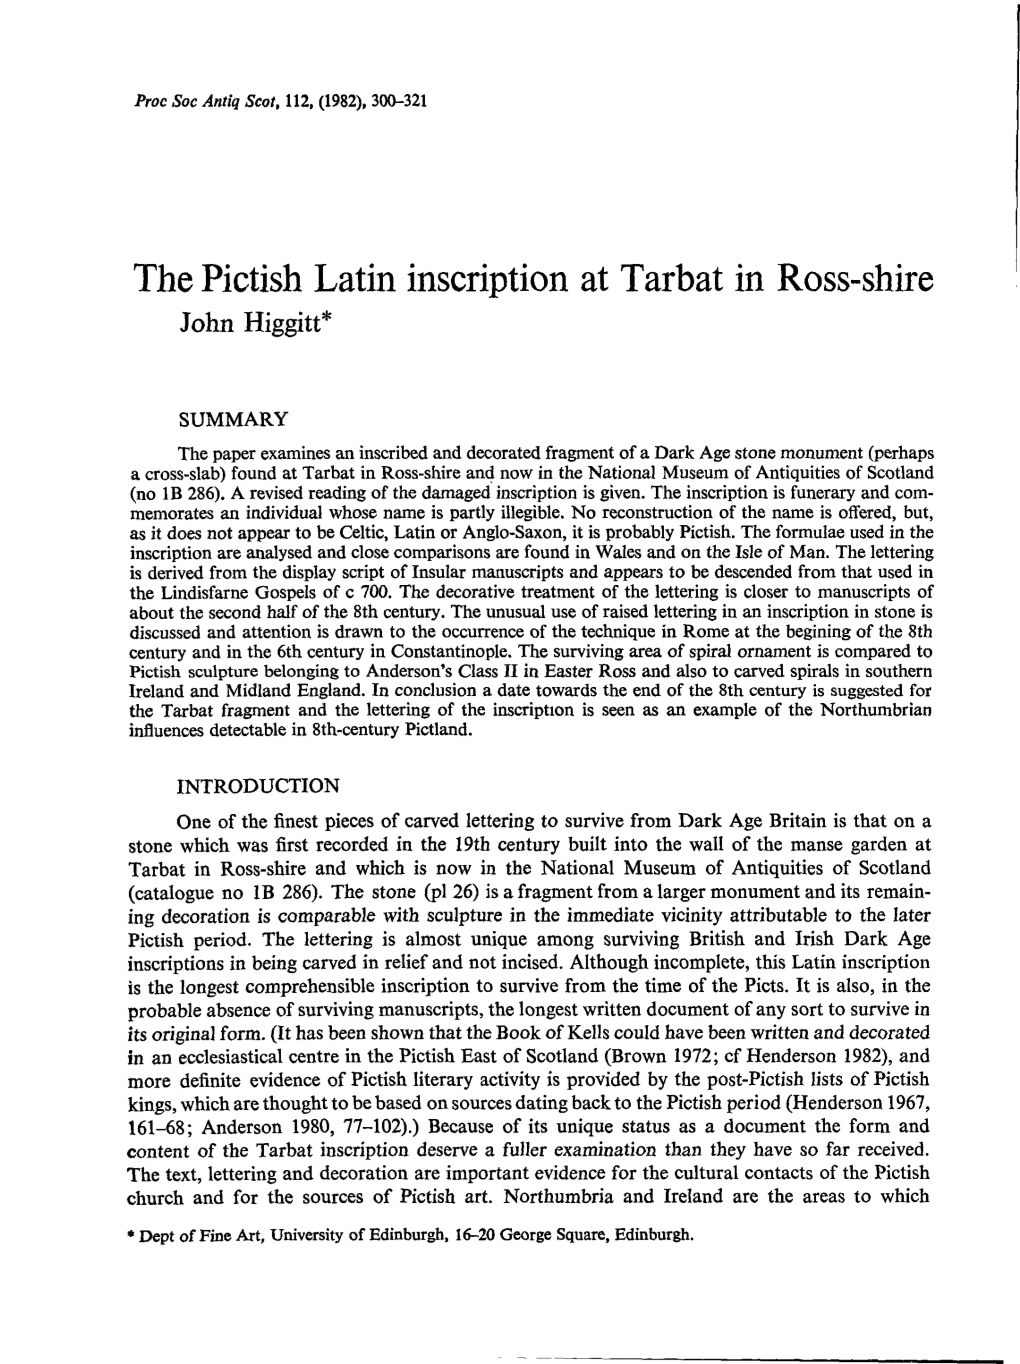 The Pictish Latin Inscription at Tarbat in Ross-Shire